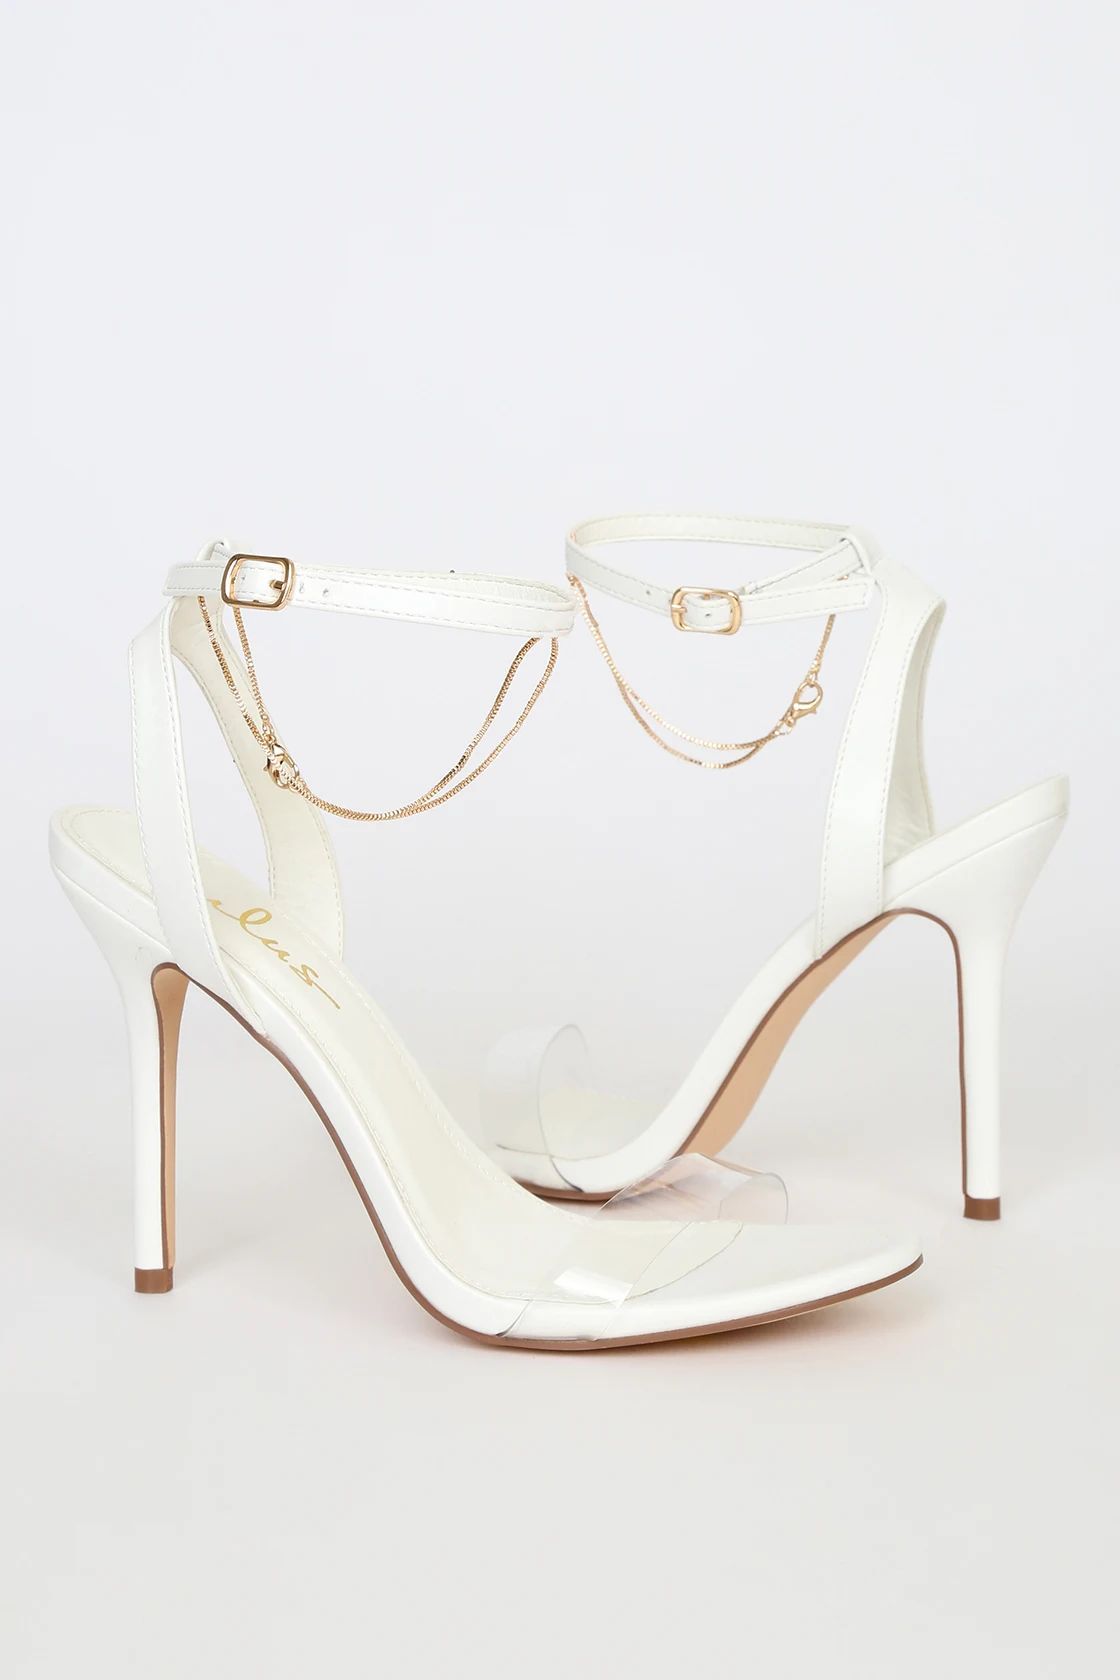 Eisley White Ankle Strap Heels | Lulus (US)